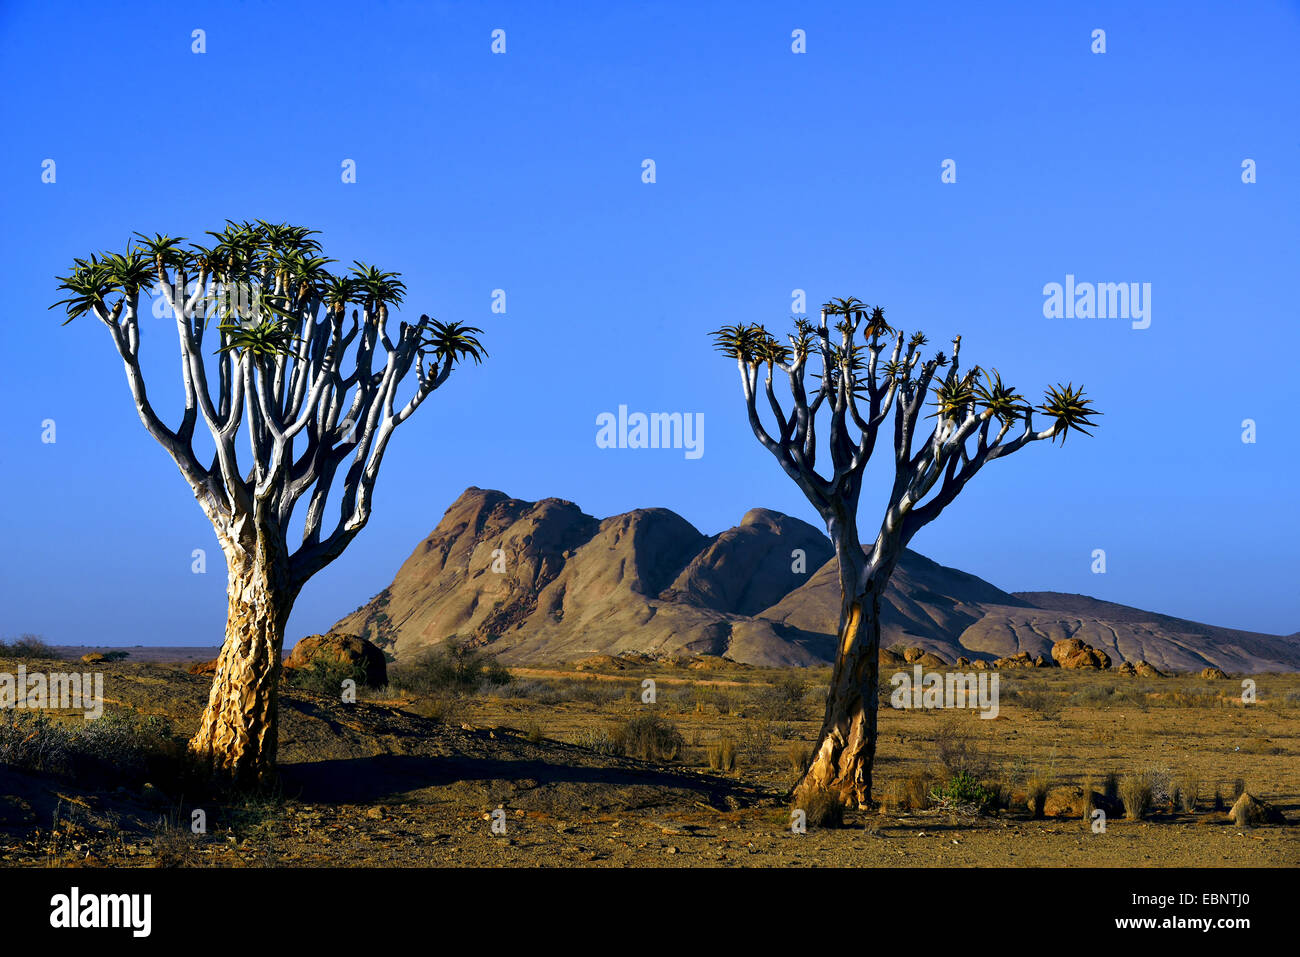 Kocurboom, Quivertree, Quiver Tree (Aloe dichotoma), Rock e kocurboom albero vicino a Bloedkoppe mountain, Namibia, Namib Naukluft National Park Foto Stock